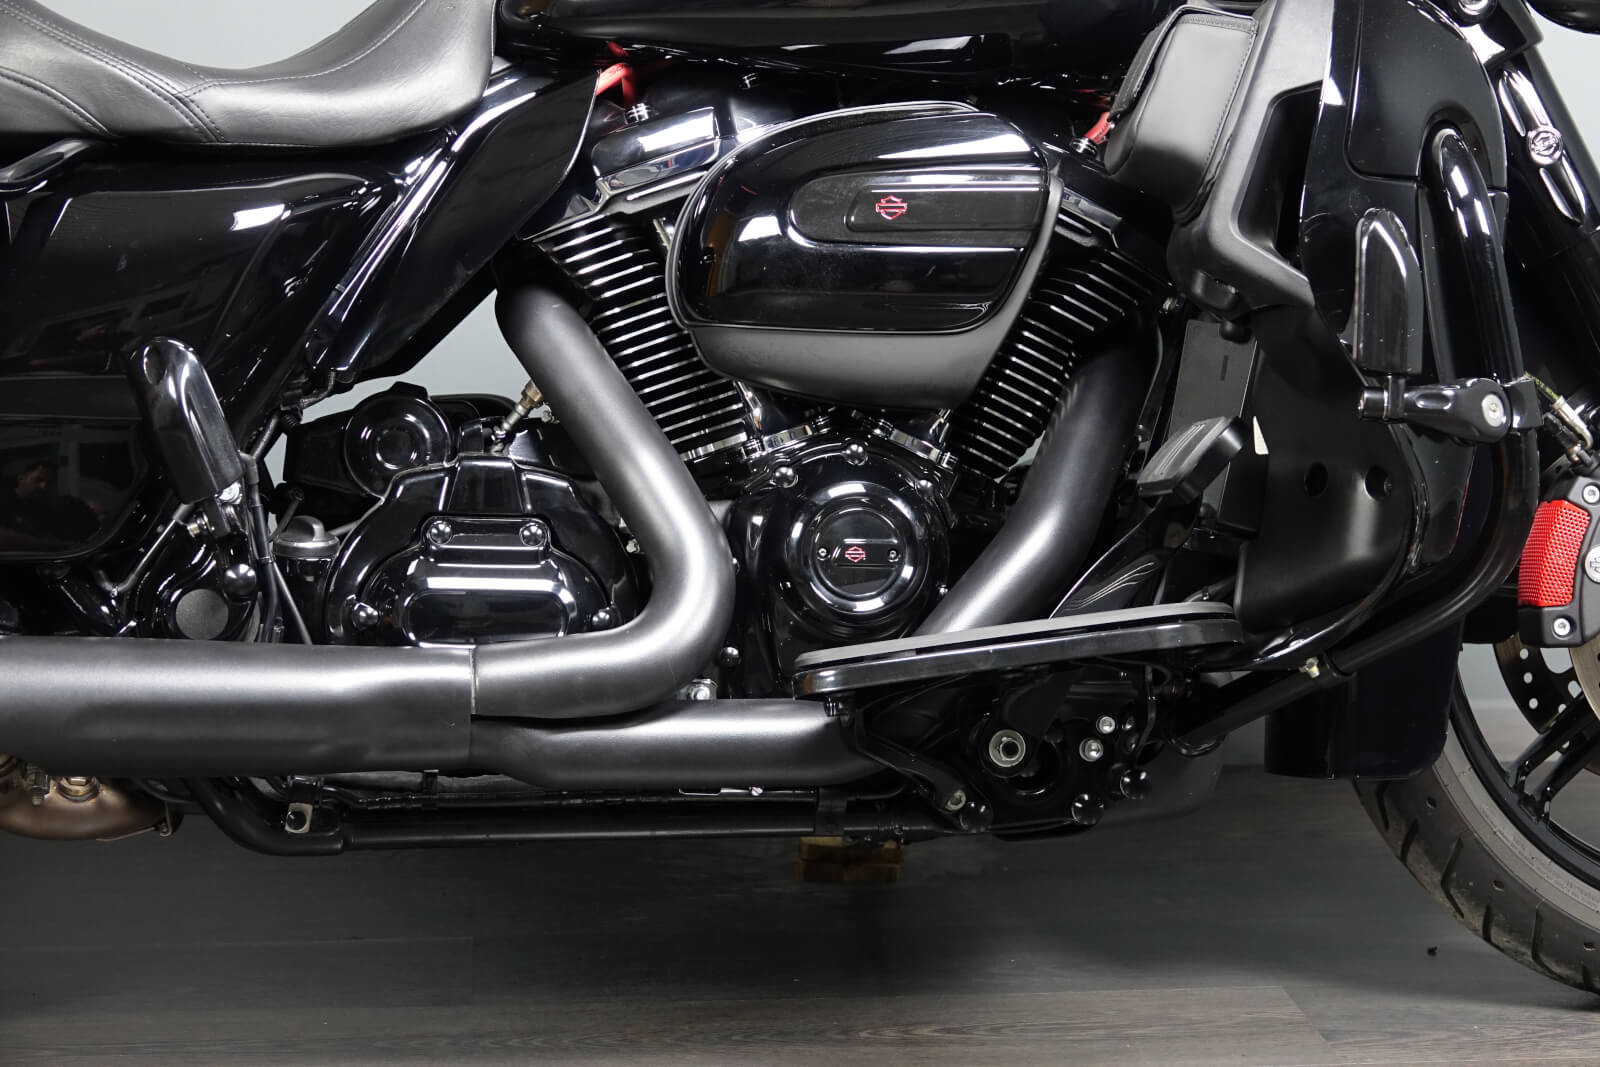 Scarico slip-on Exhaust Revolution per TOURING® 2021-UP compatibile per gamma Harley-Davidson® Touring®